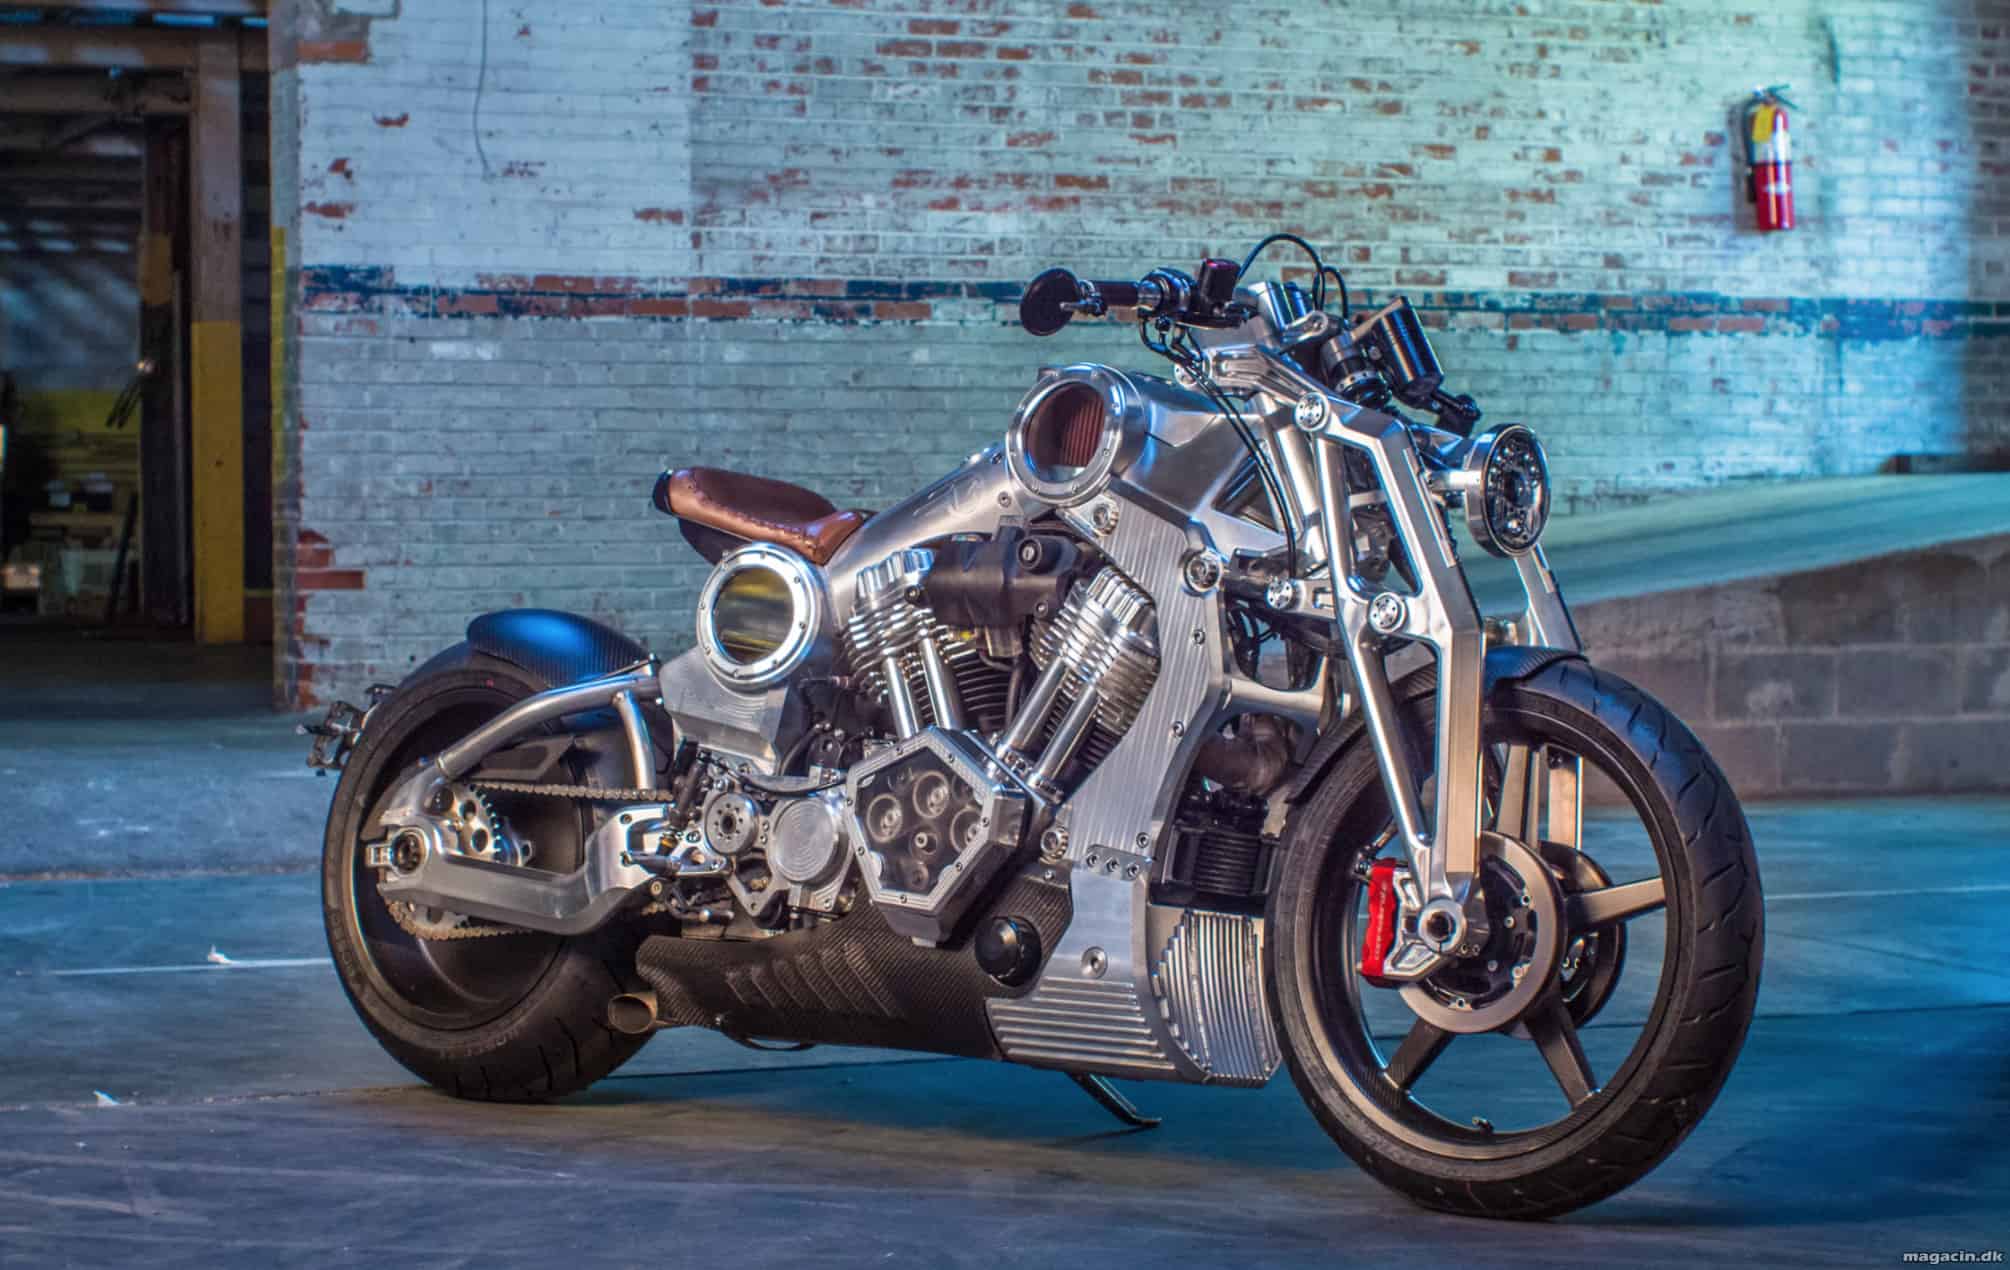 Confederate Motorcycles – nye ekstreme designs